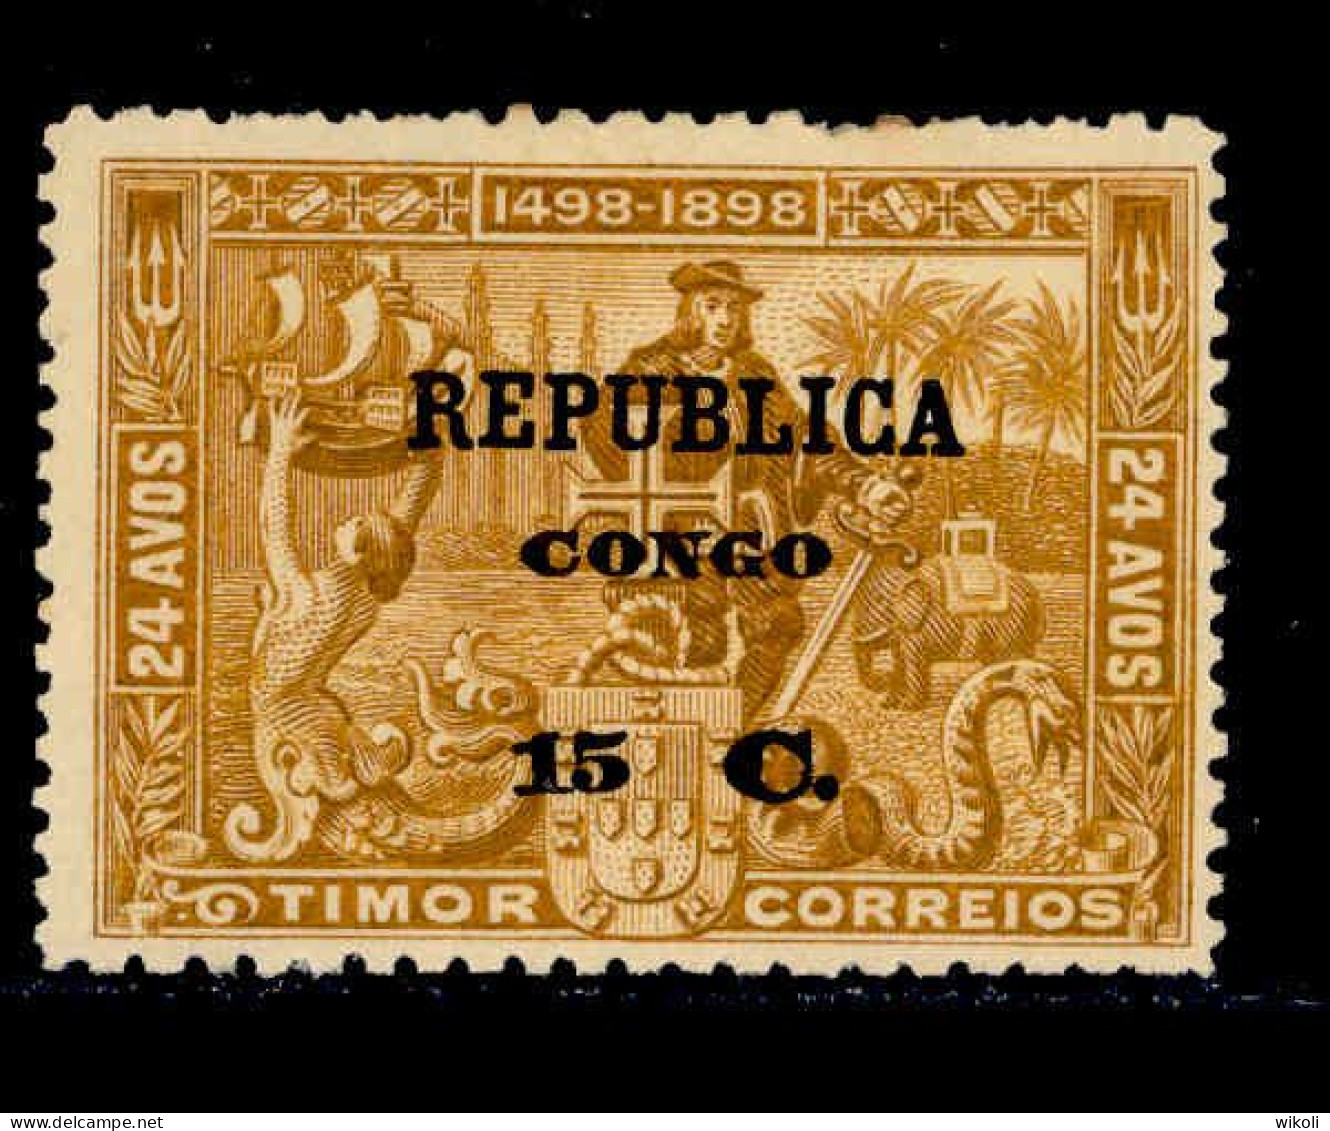 ! ! Congo - 1913 Vasco Gama On Timor 15 C - Af. 98 - MH - Congo Portuguesa